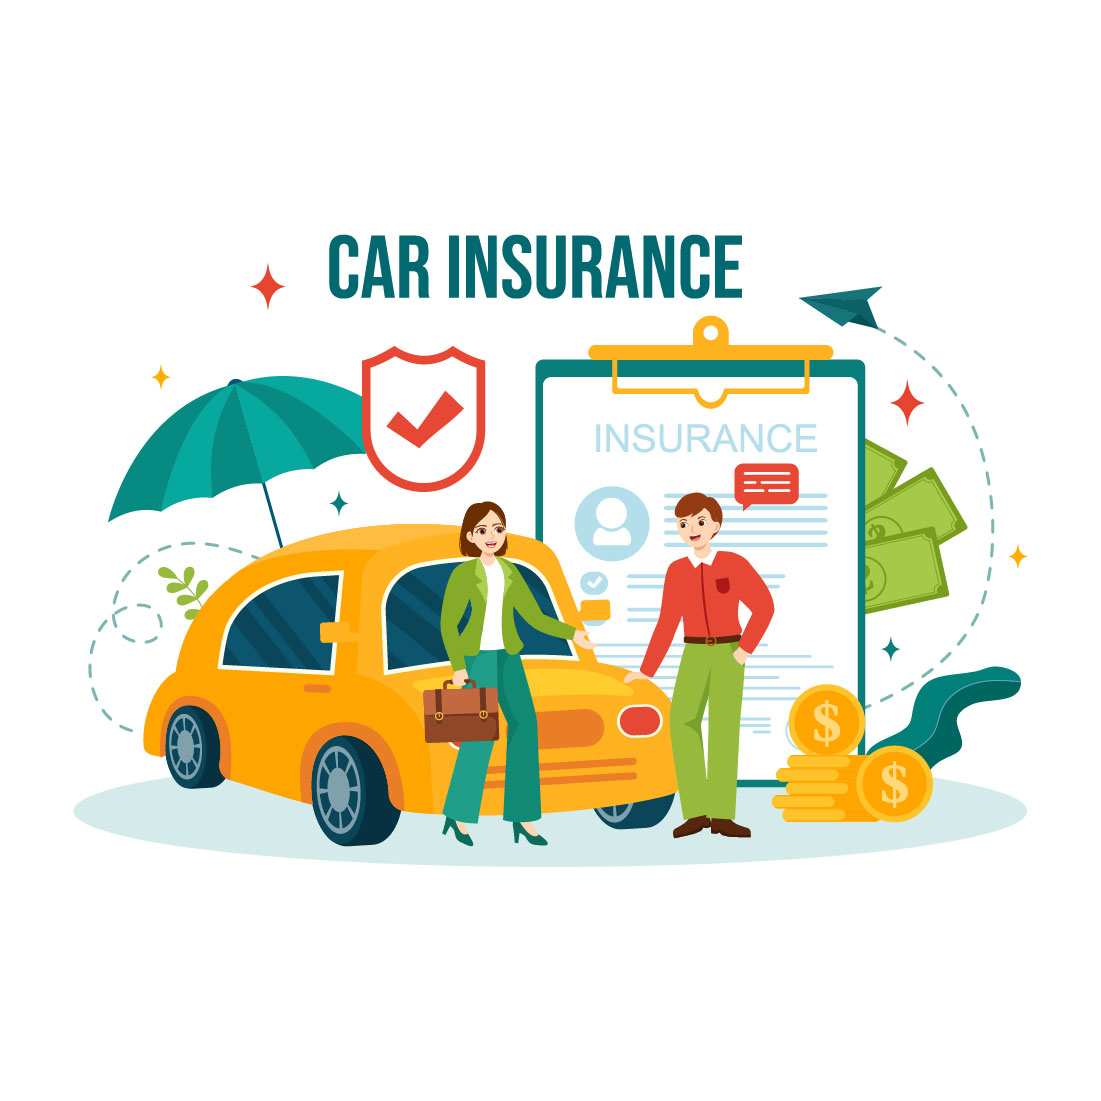 12 Car Insurance Vector Illustration cover image.